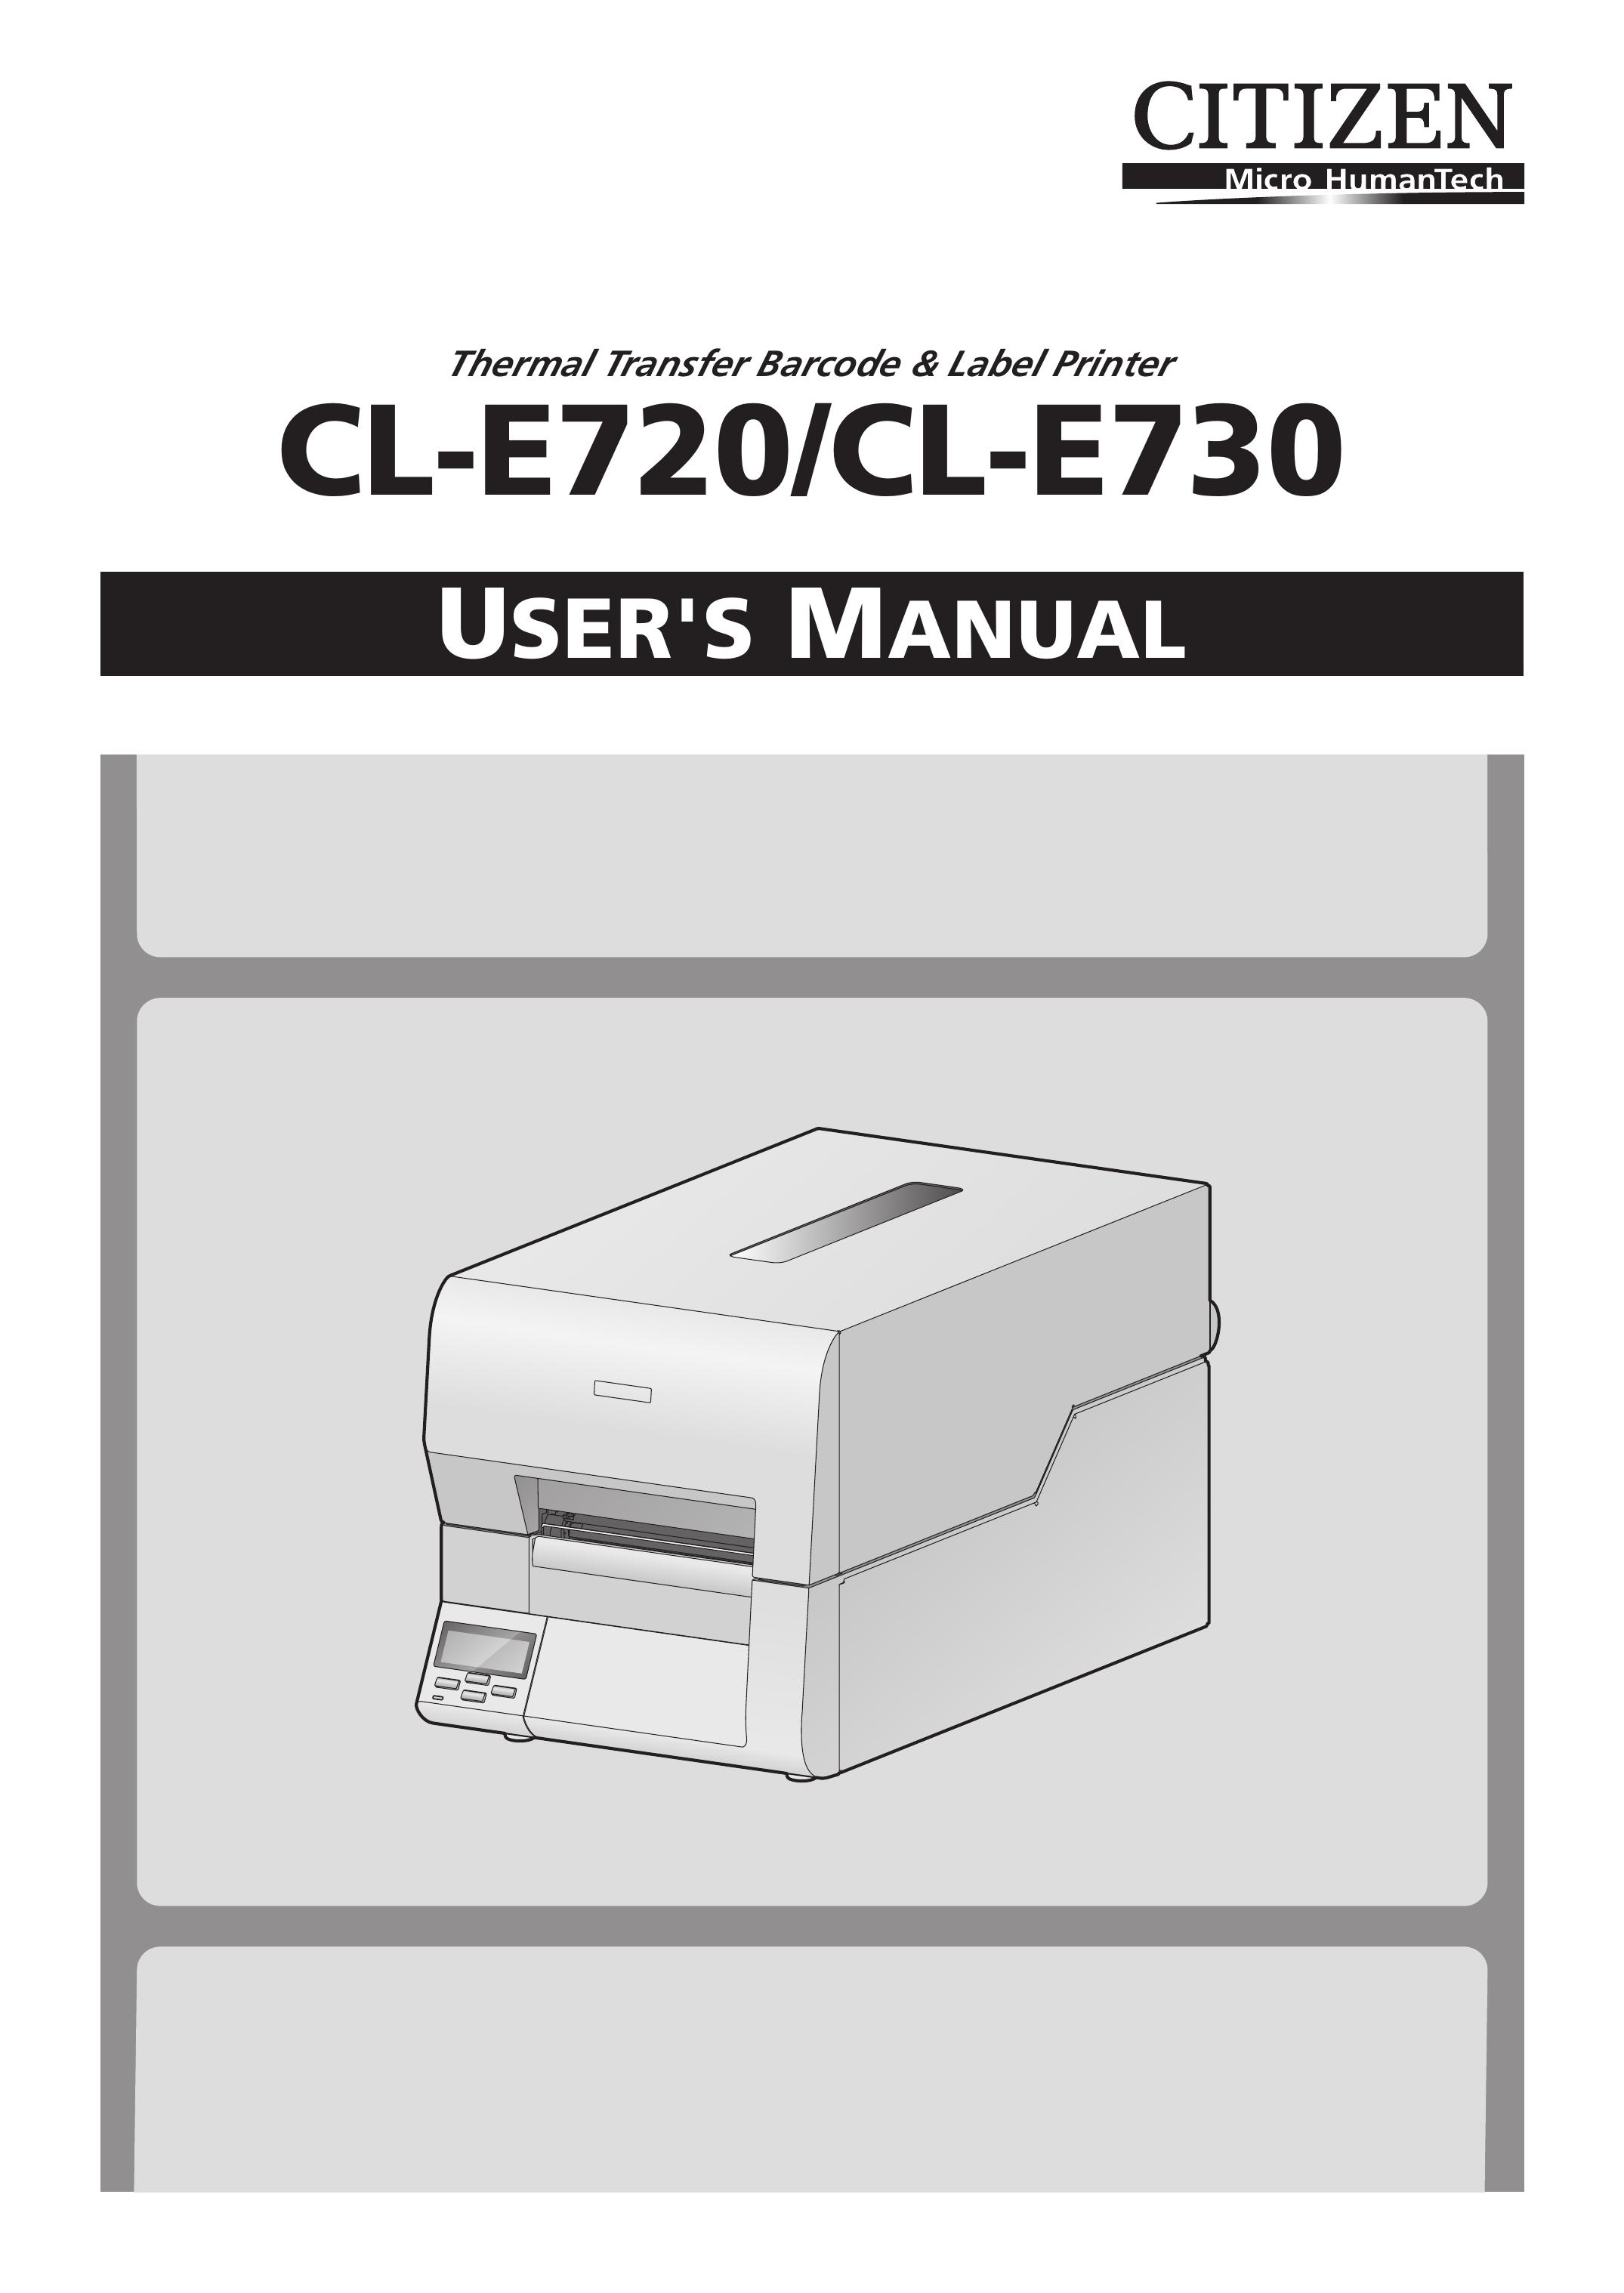 Citizen CL-E720 Slow Cooker User Manual